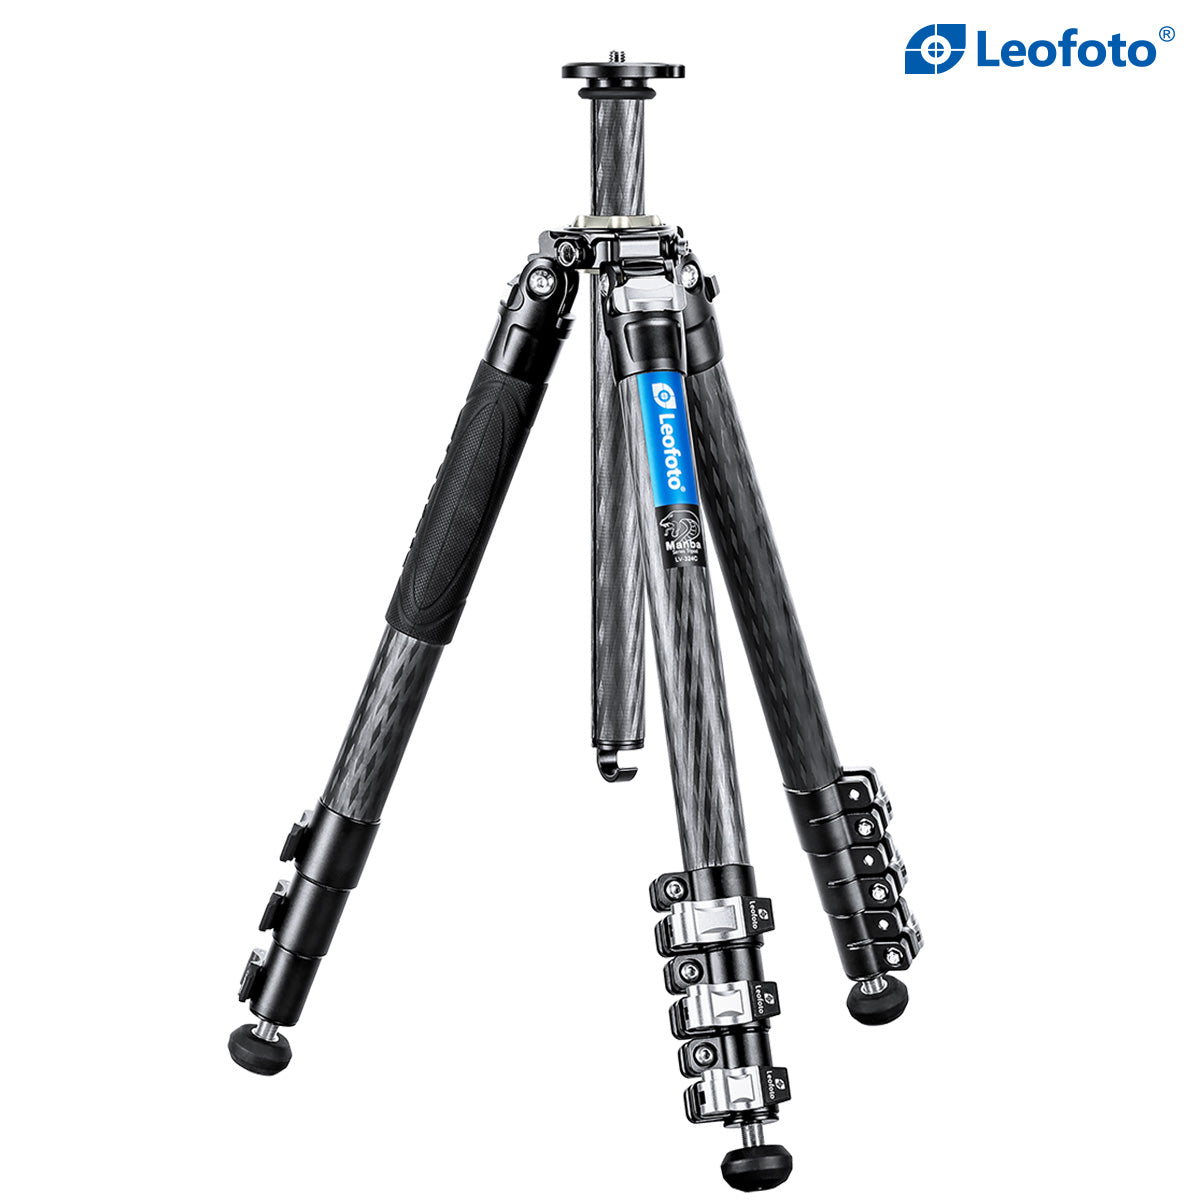 Leofoto LV-324C 4-Section Carbon Fiber Video Tripod / Built-In Hollow Ball and Flip Leg Locks